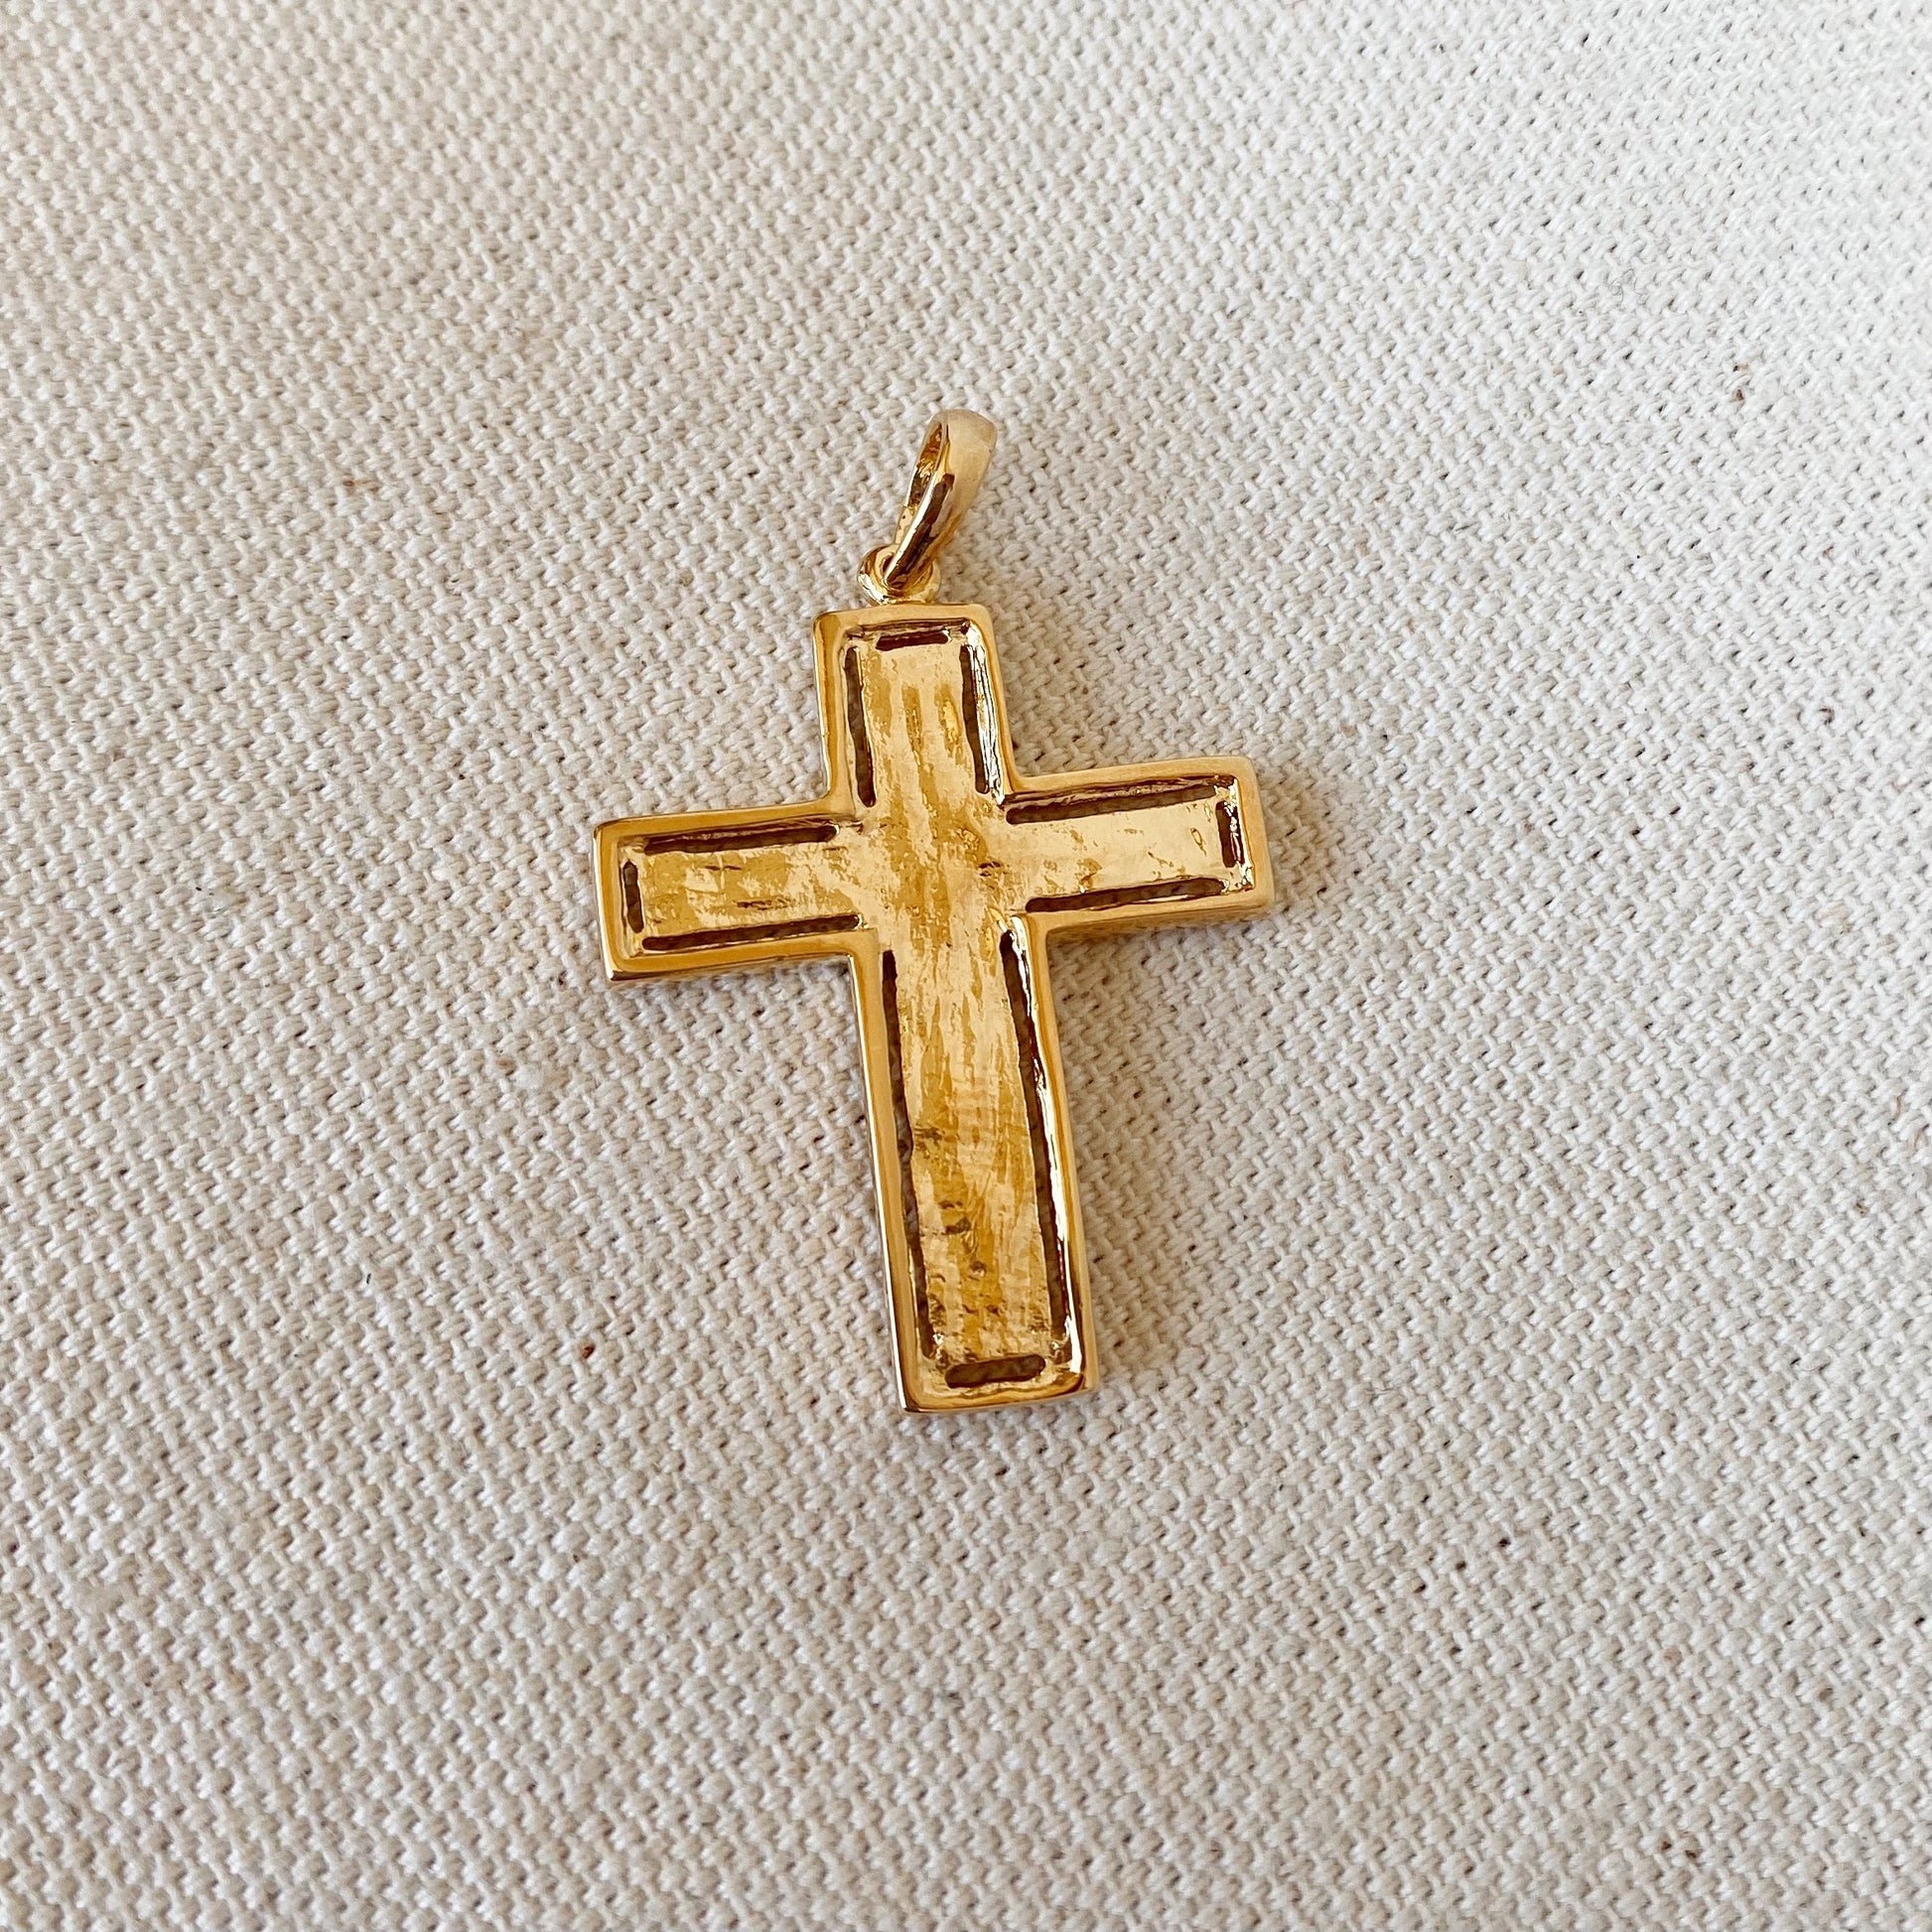 GoldFi 18k Gold Filled Rustic Cross Pendant